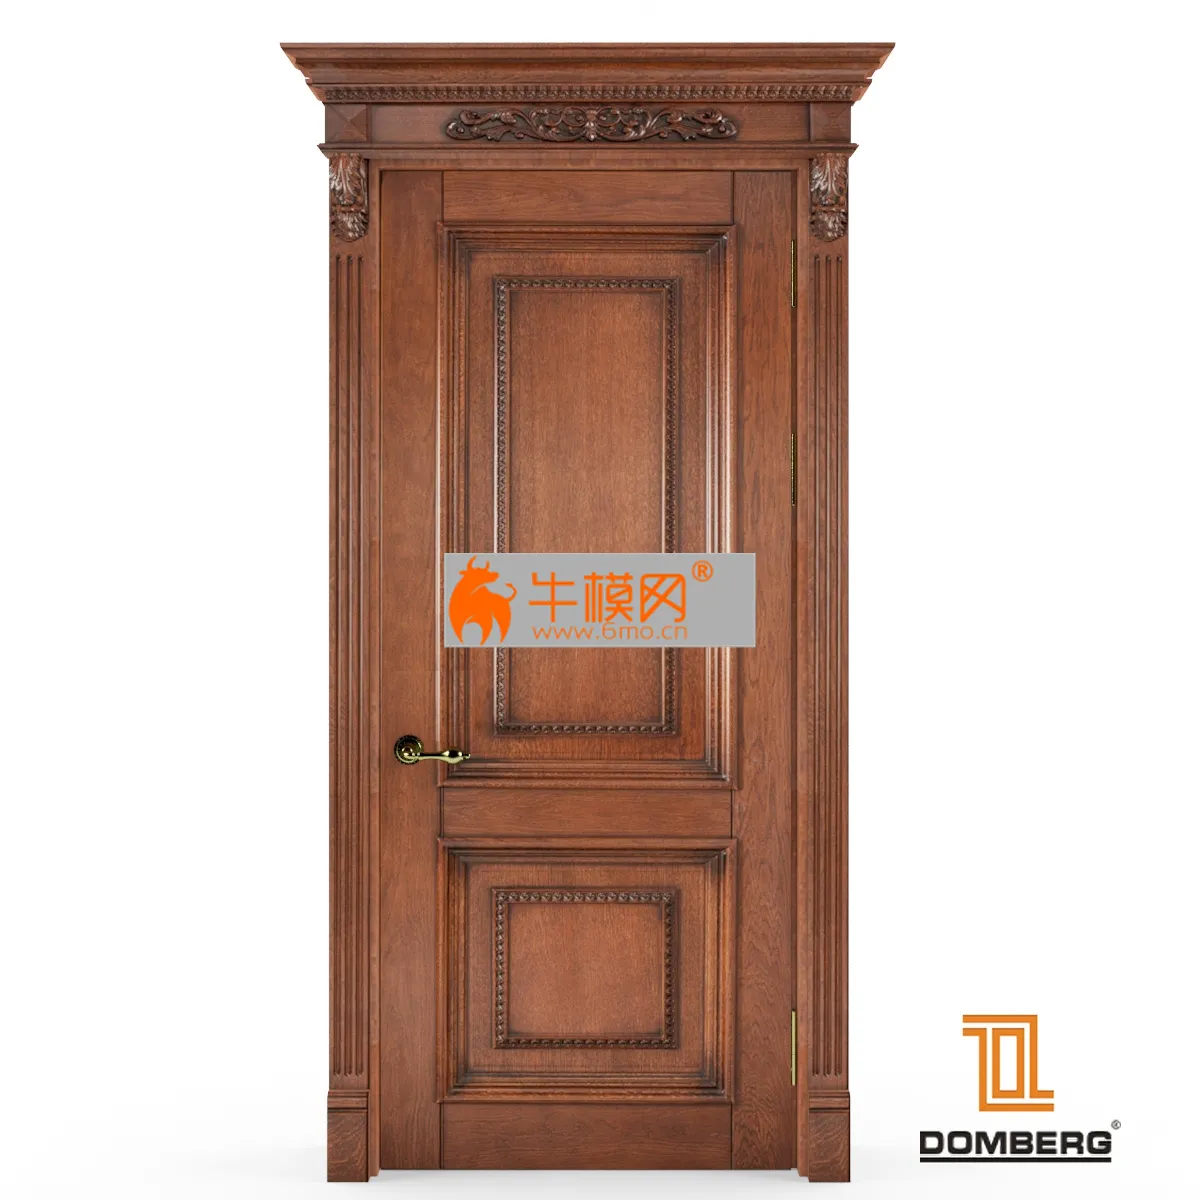 Threaded Doors Domberg – 4929